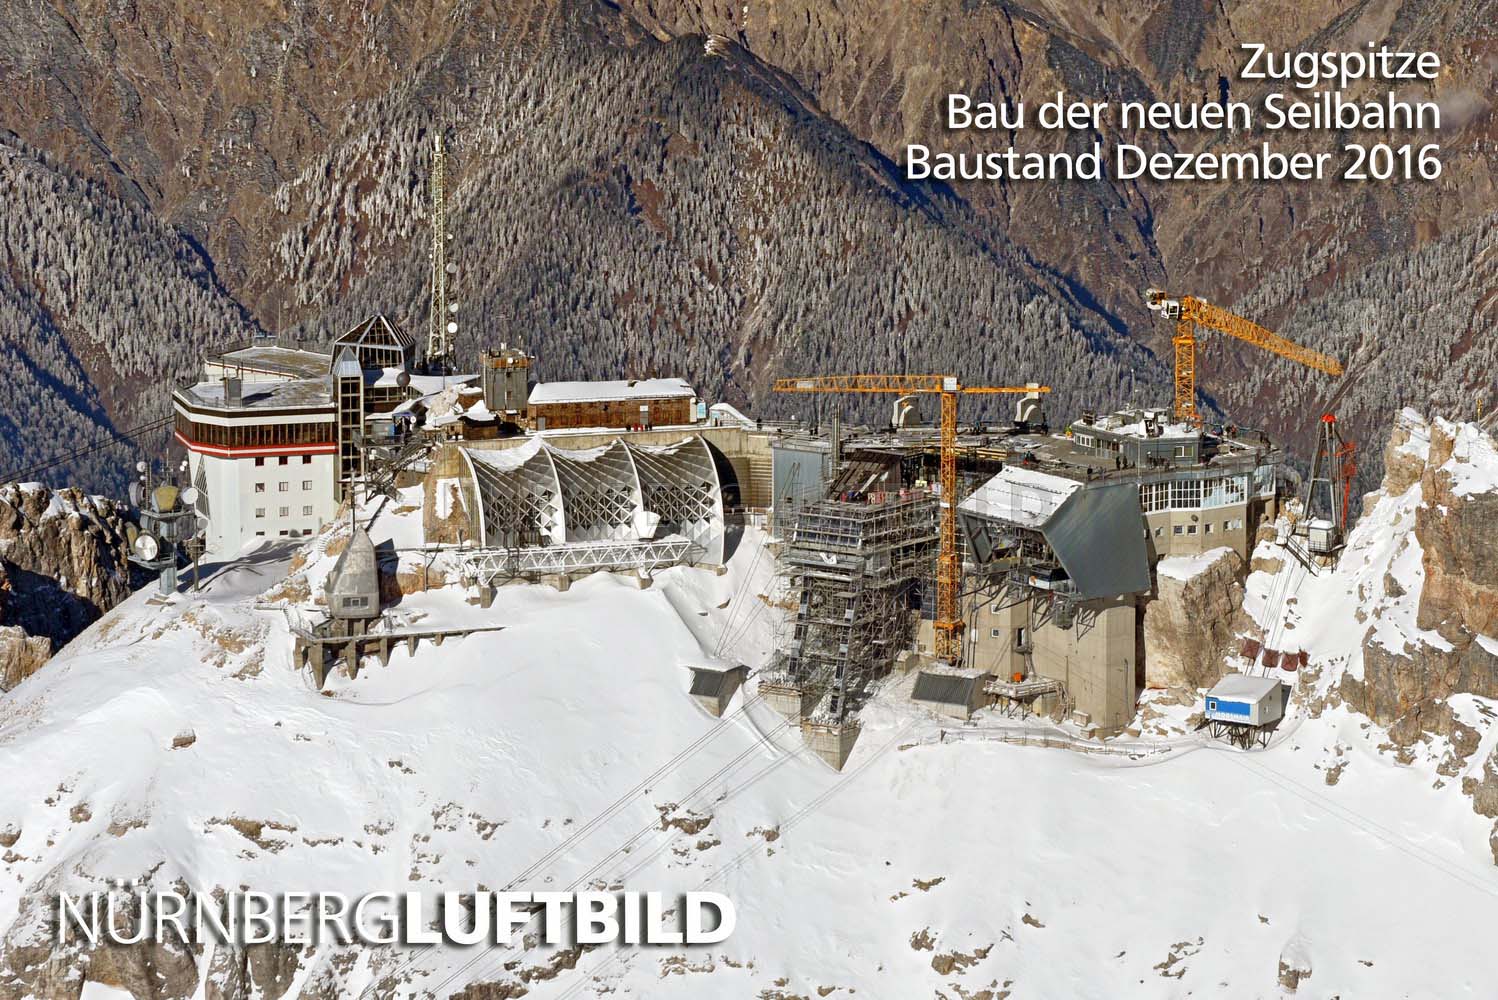 Zugspitze, Bau der neuen Seilbahn, Baustand Dezember 2016, Luftbild